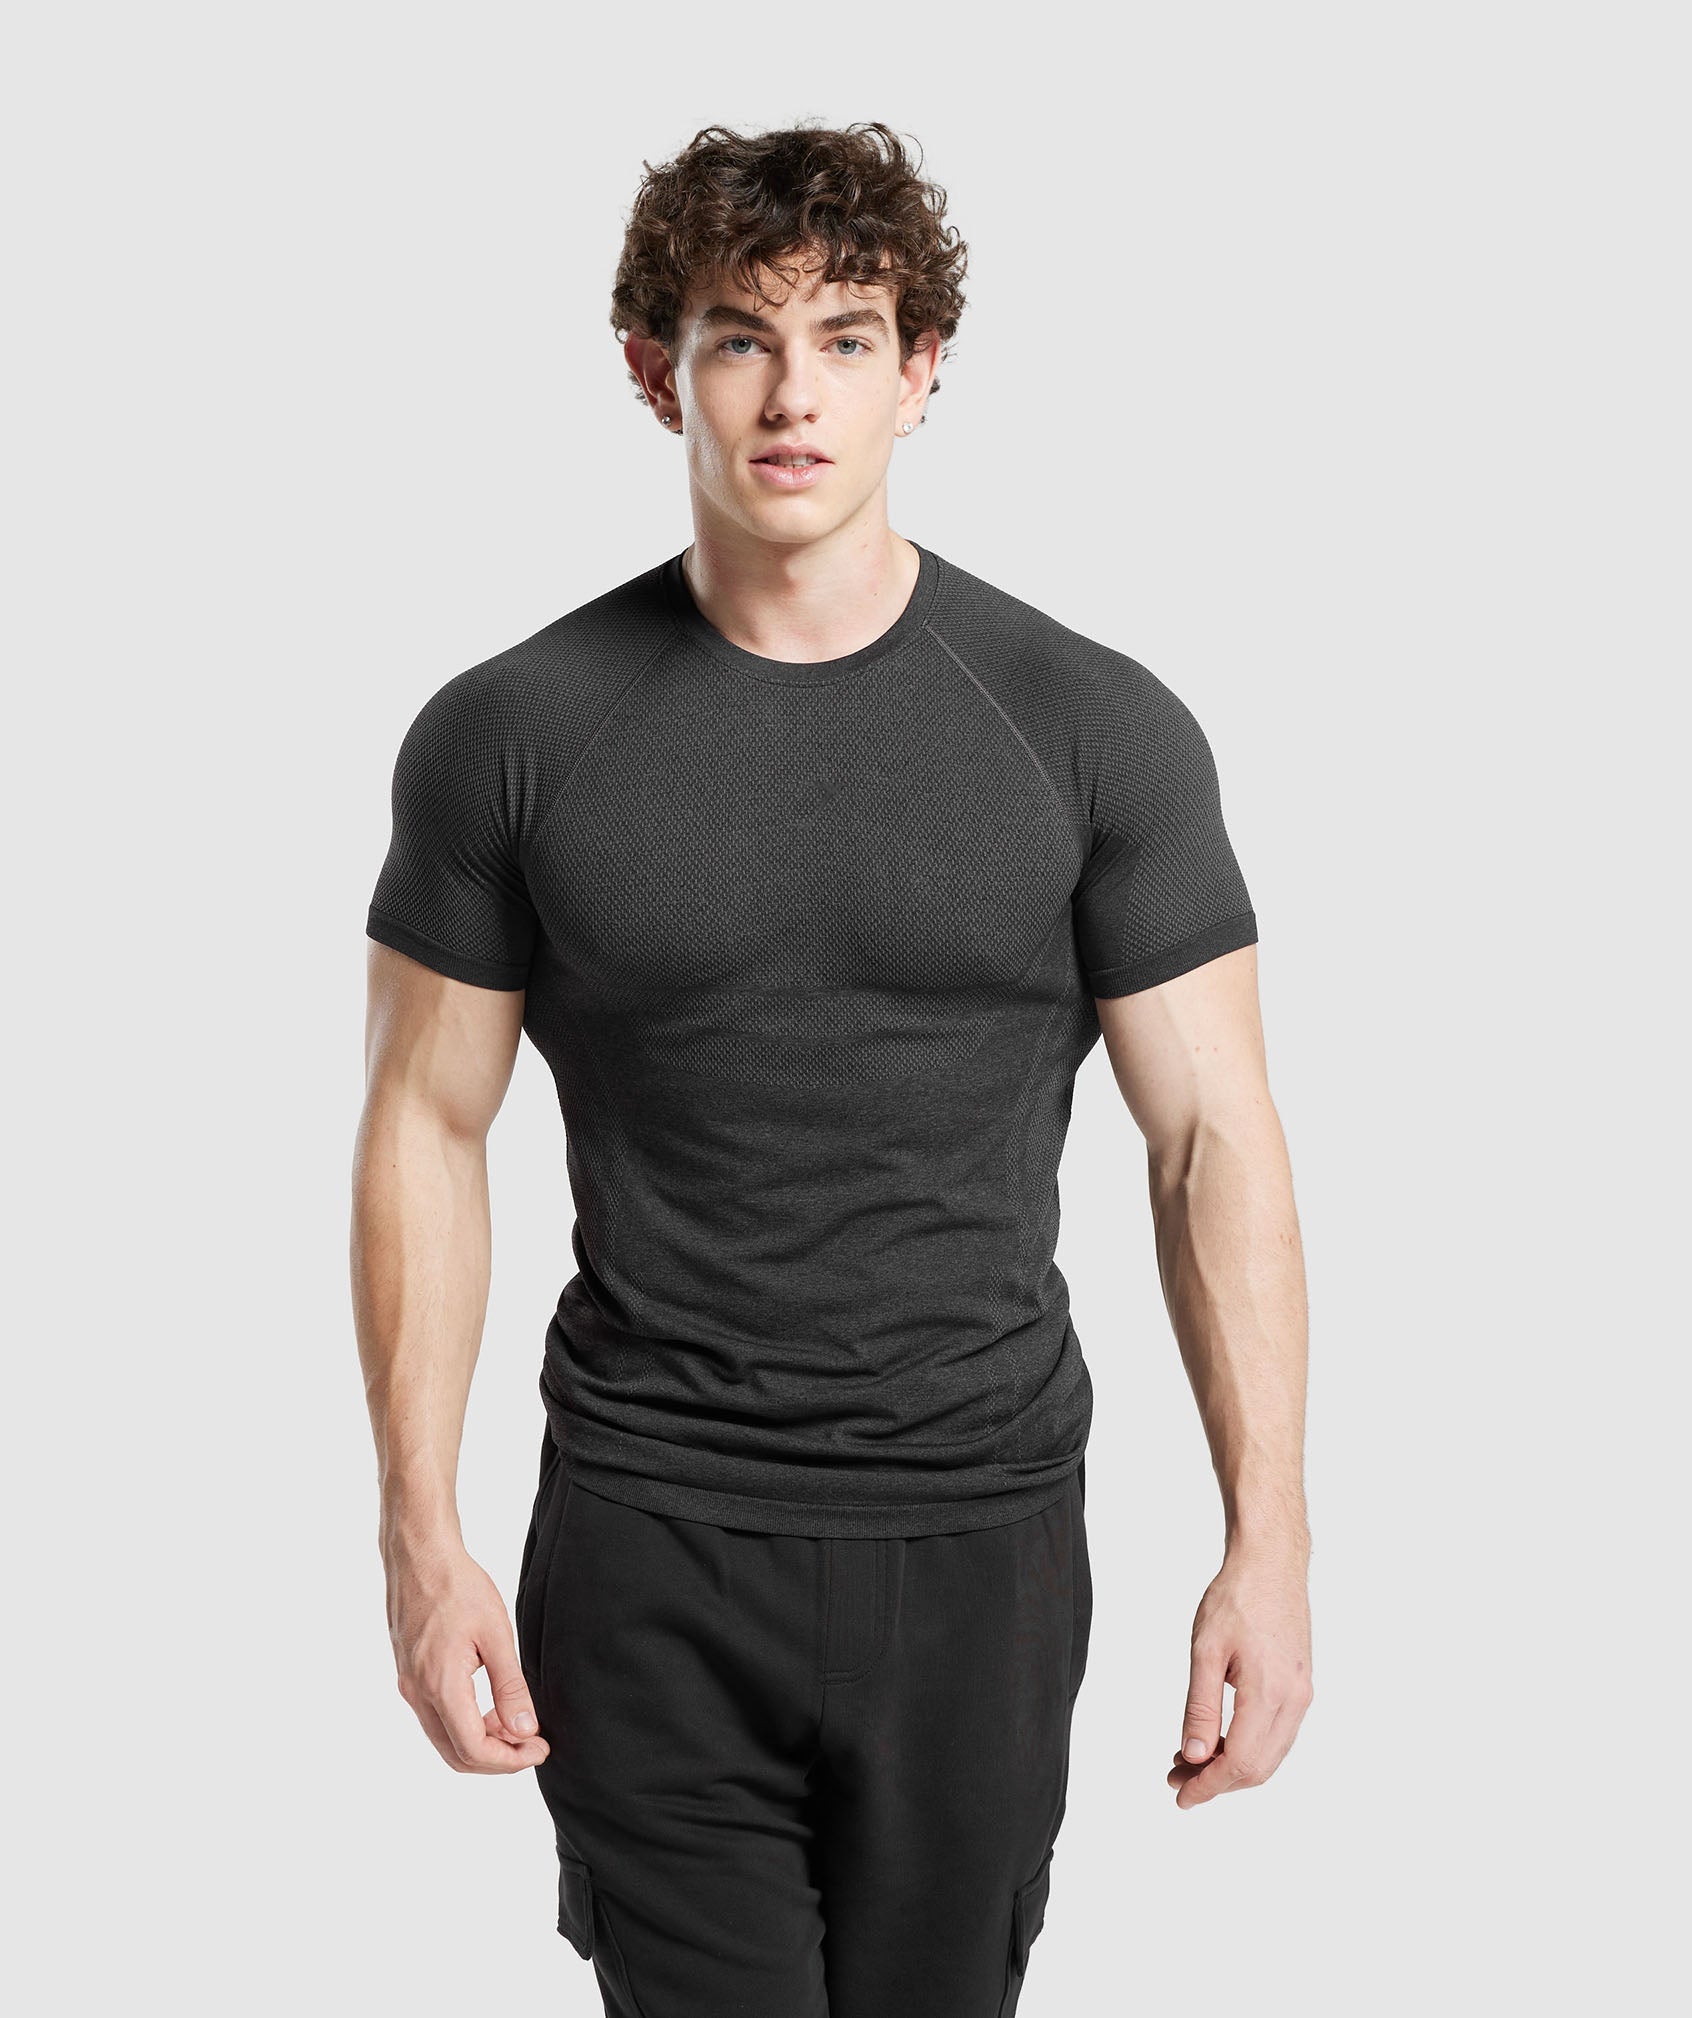 Men's Seamless Clothing, Seamless Gym Wear For Men